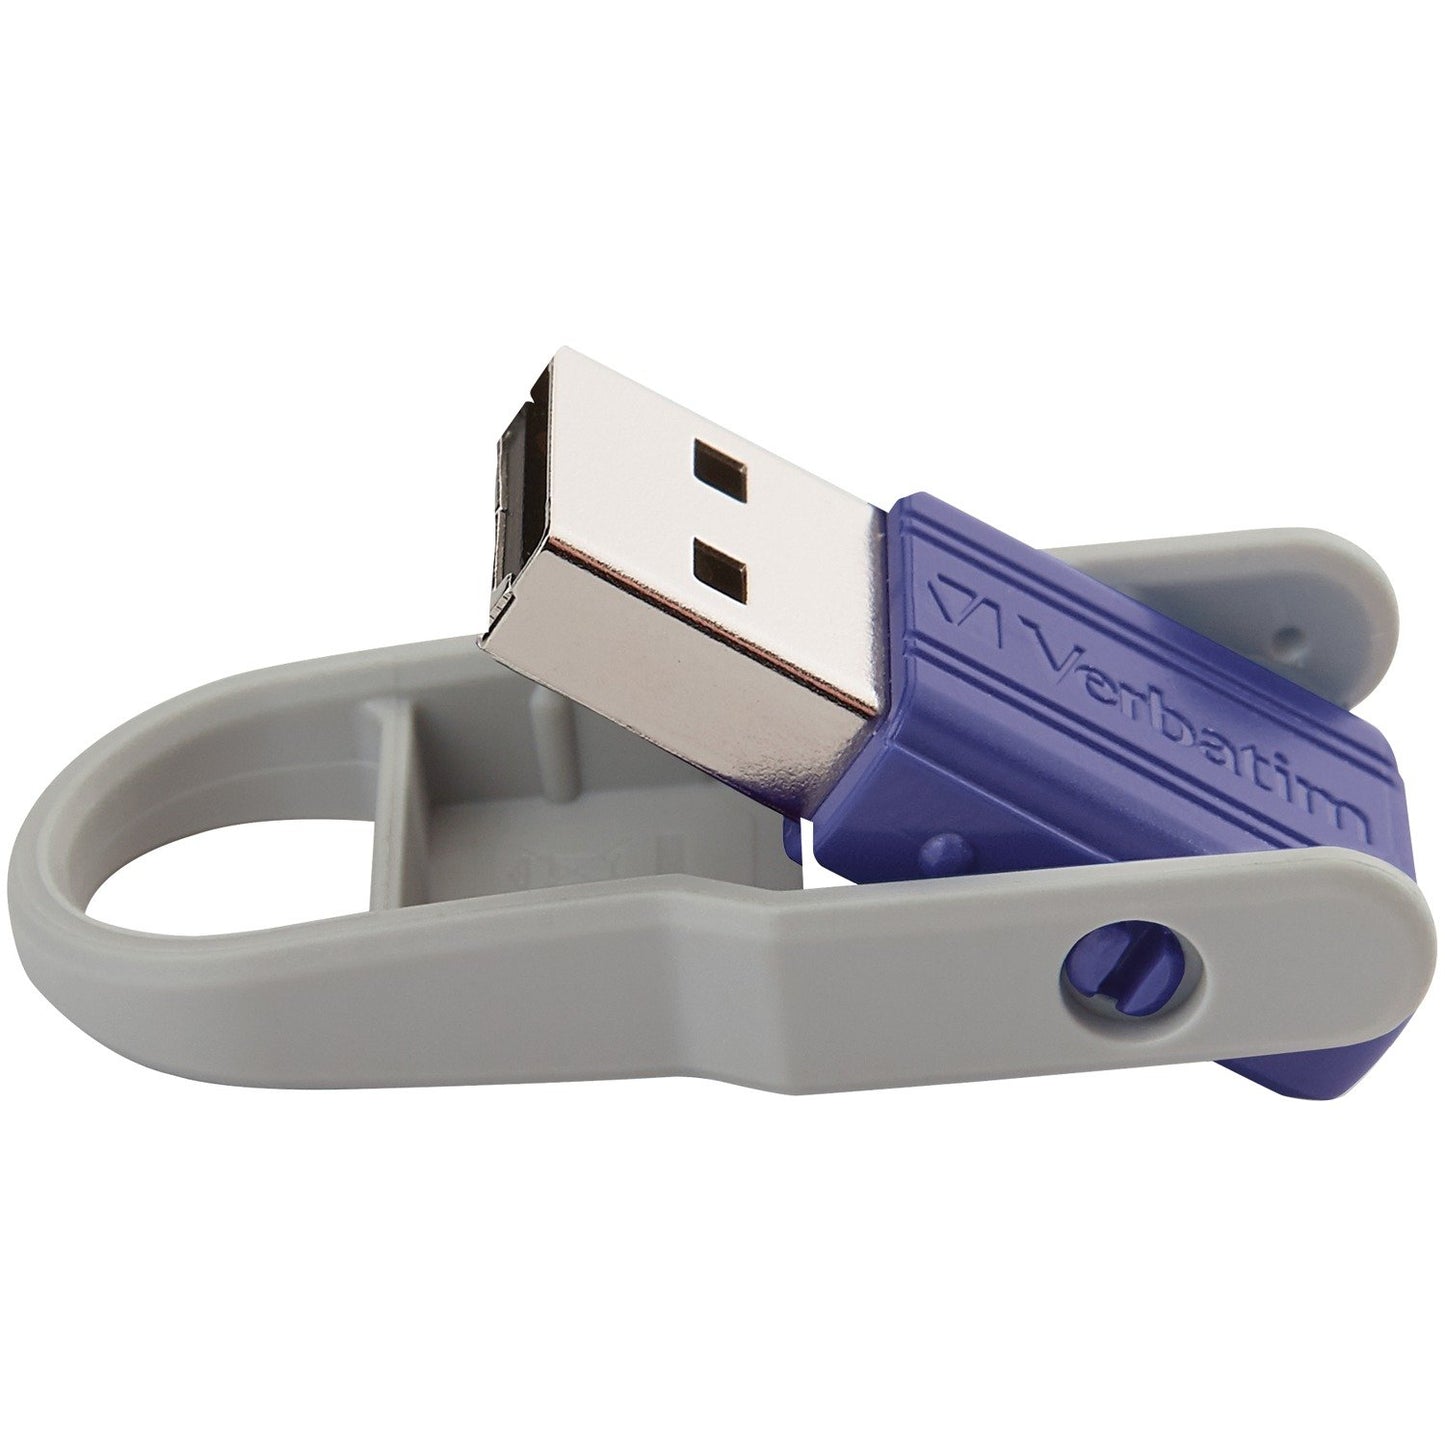 Verbatim 70060 32 GB Store 'n' Flip USB Drive, Violet